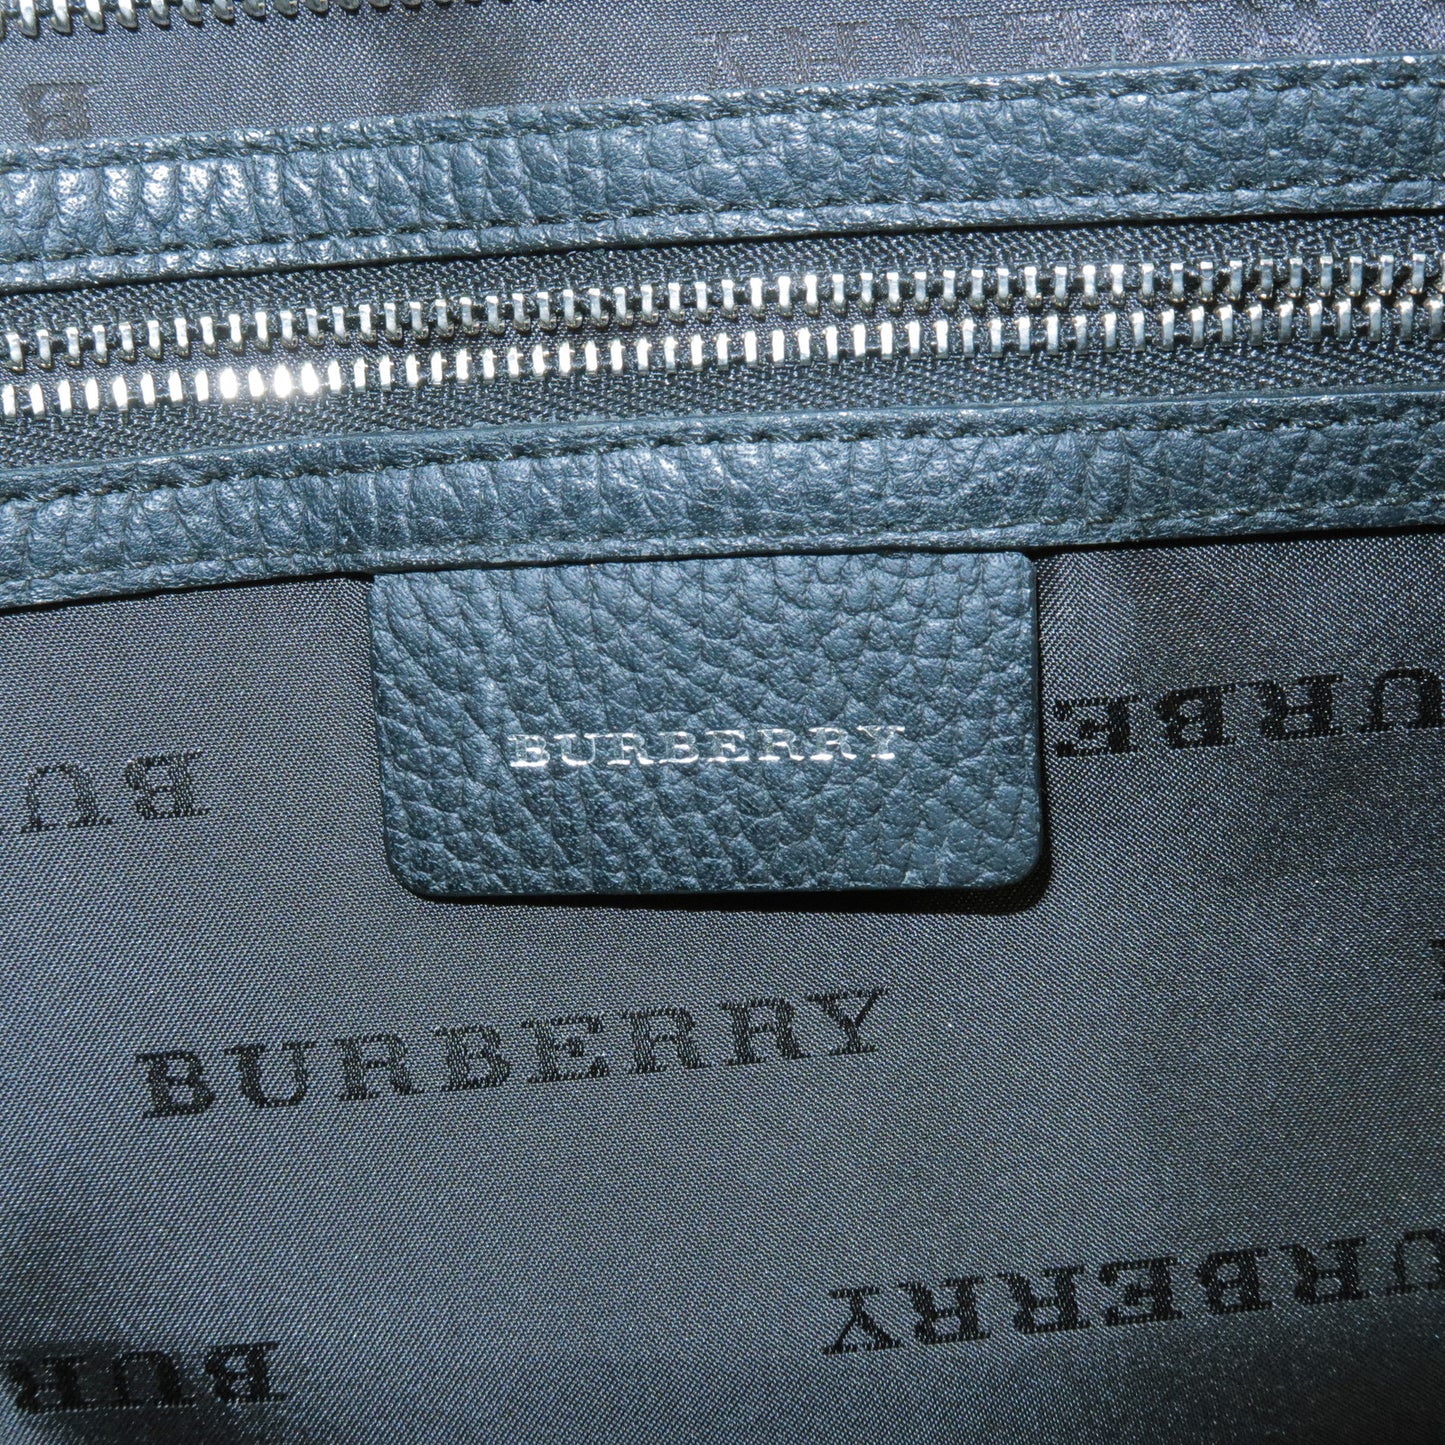 BURBERRY Nova Plaid Canvas Leather Tote Bag Black Beige